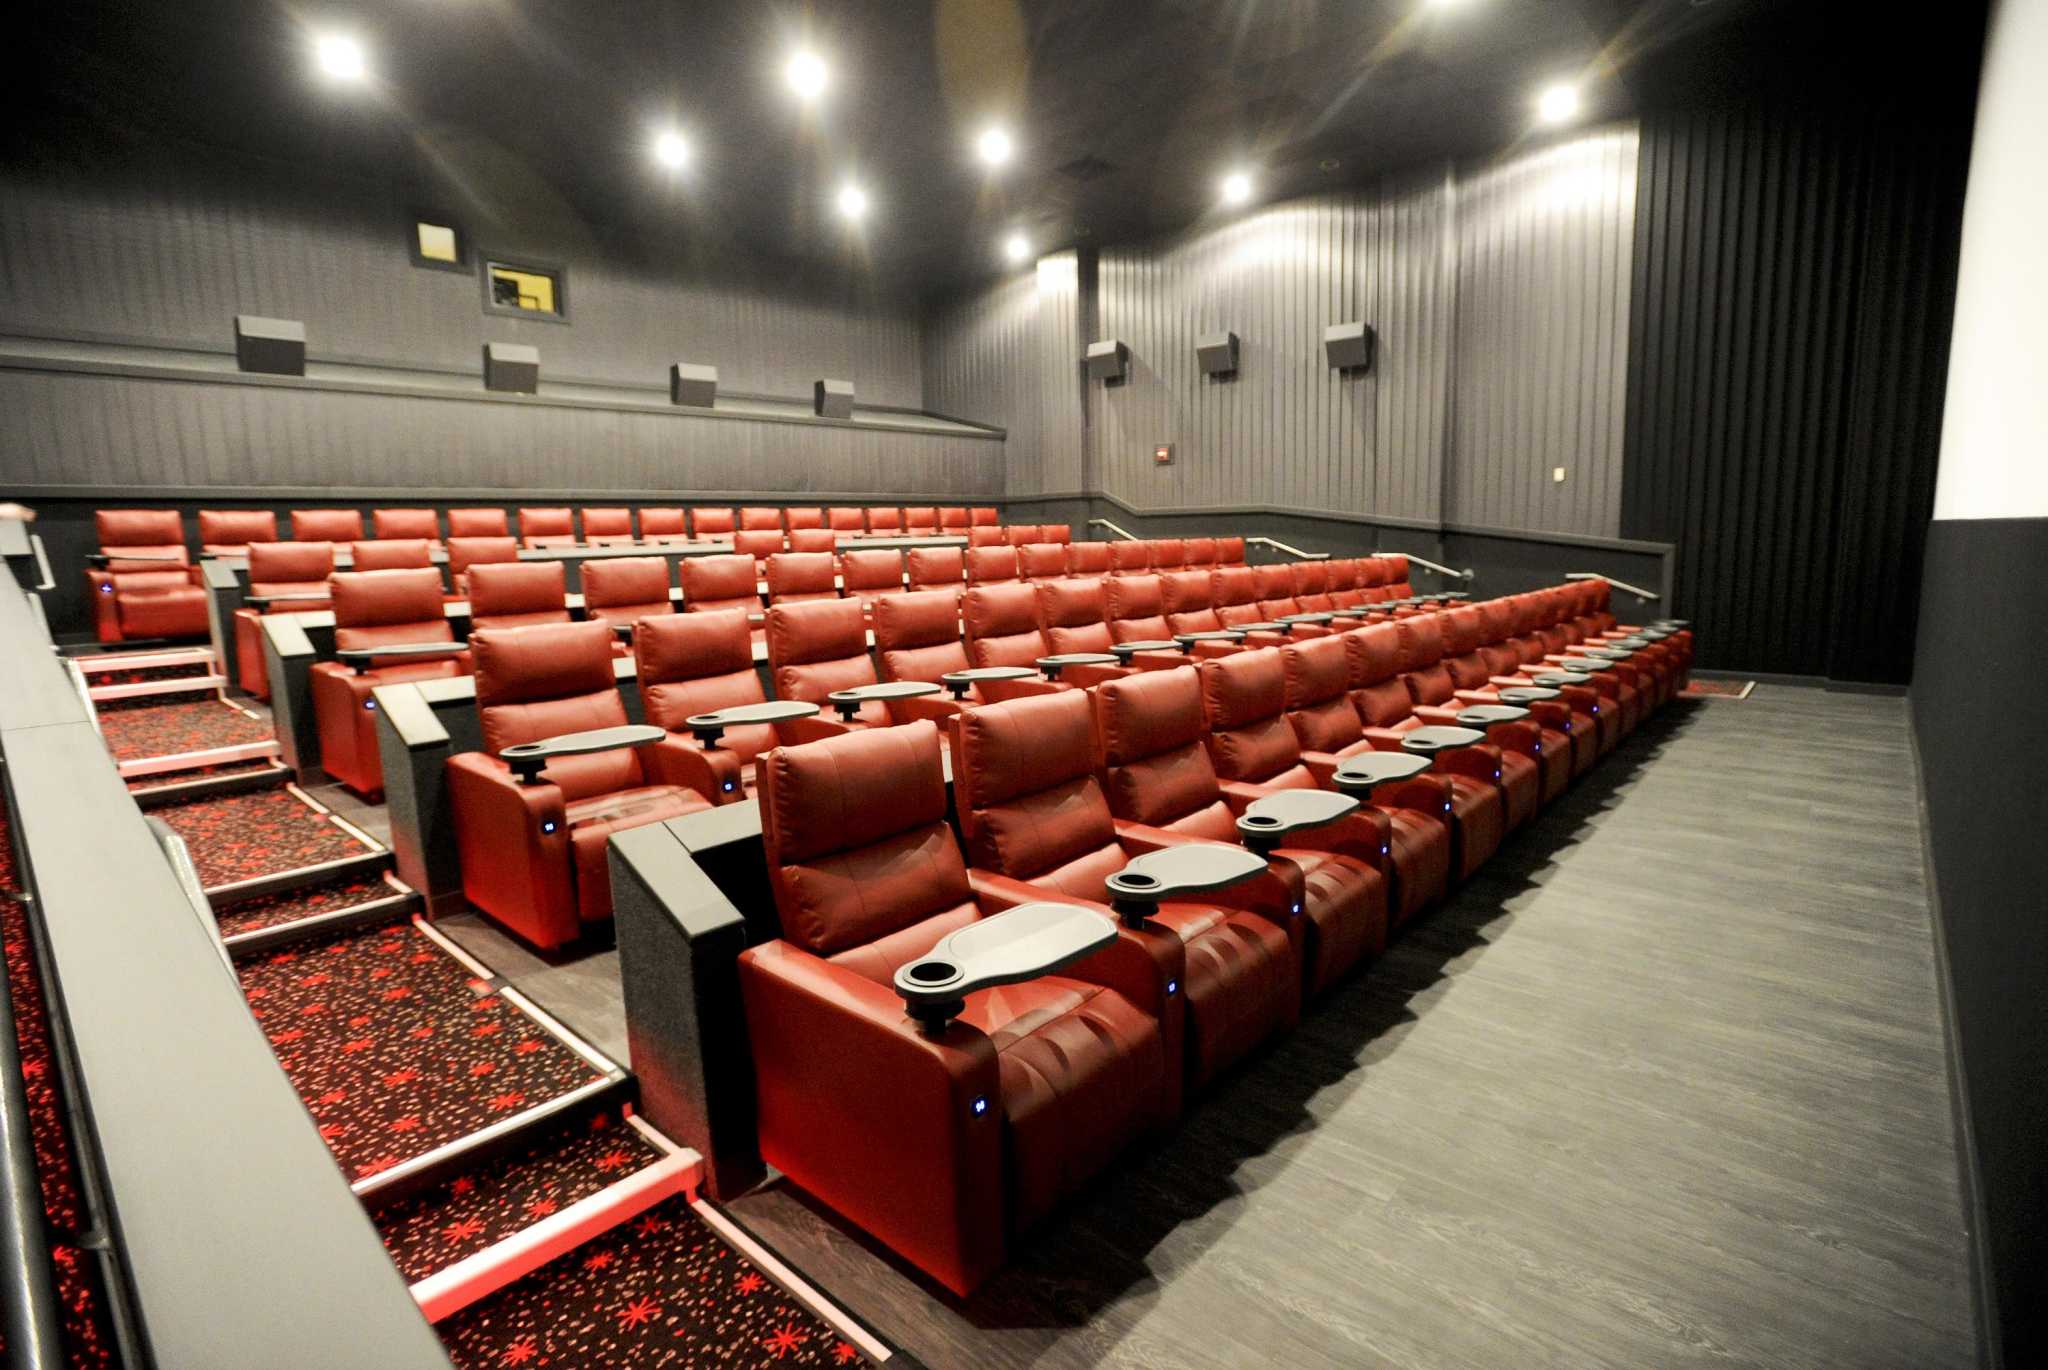 Stamford movie theater completes major renovations - CTInsider.com